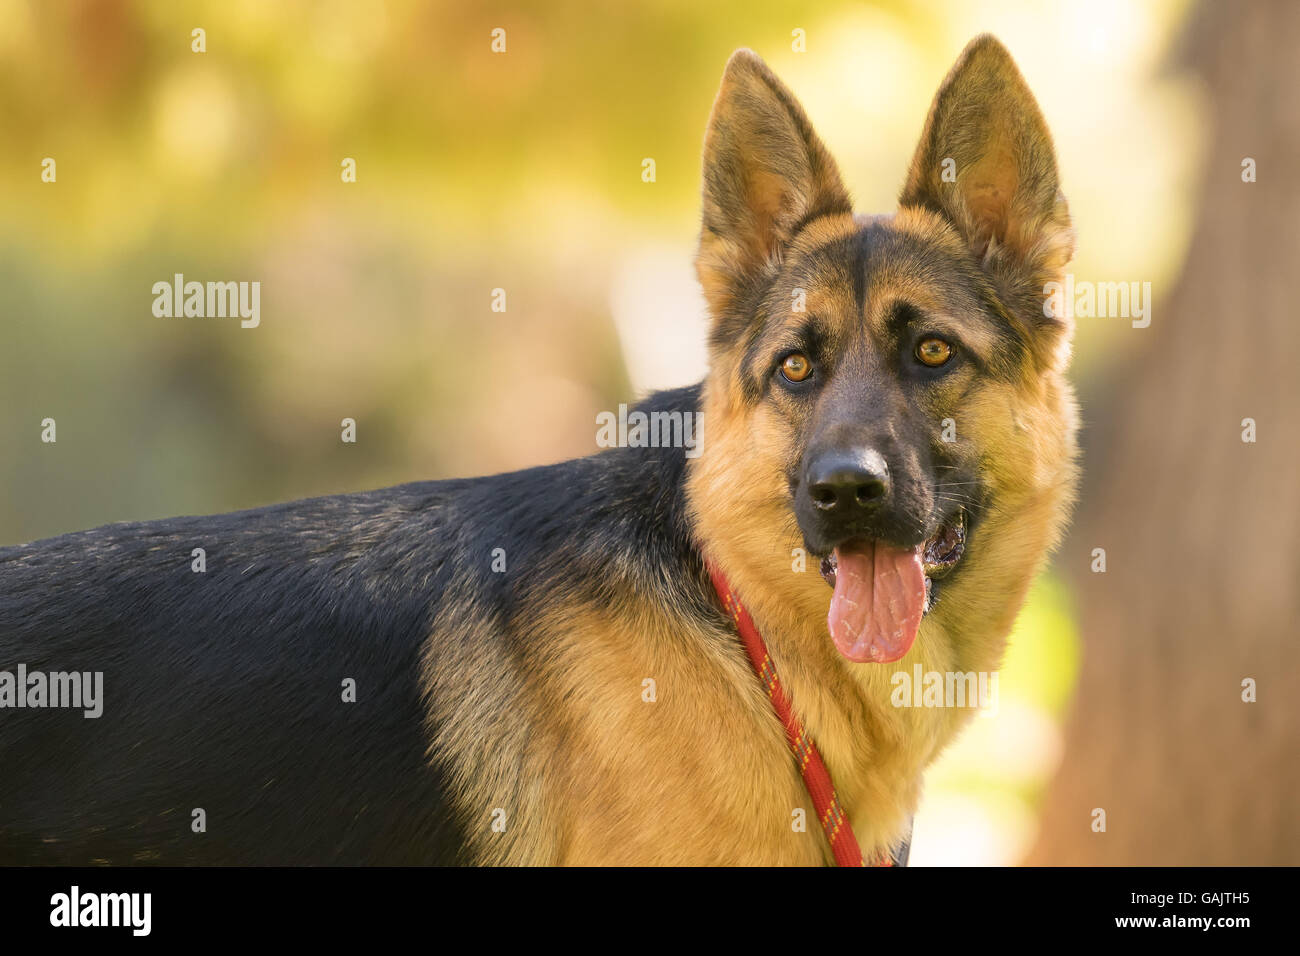 German shepherd dog portrait. A close up look. Stock Photo